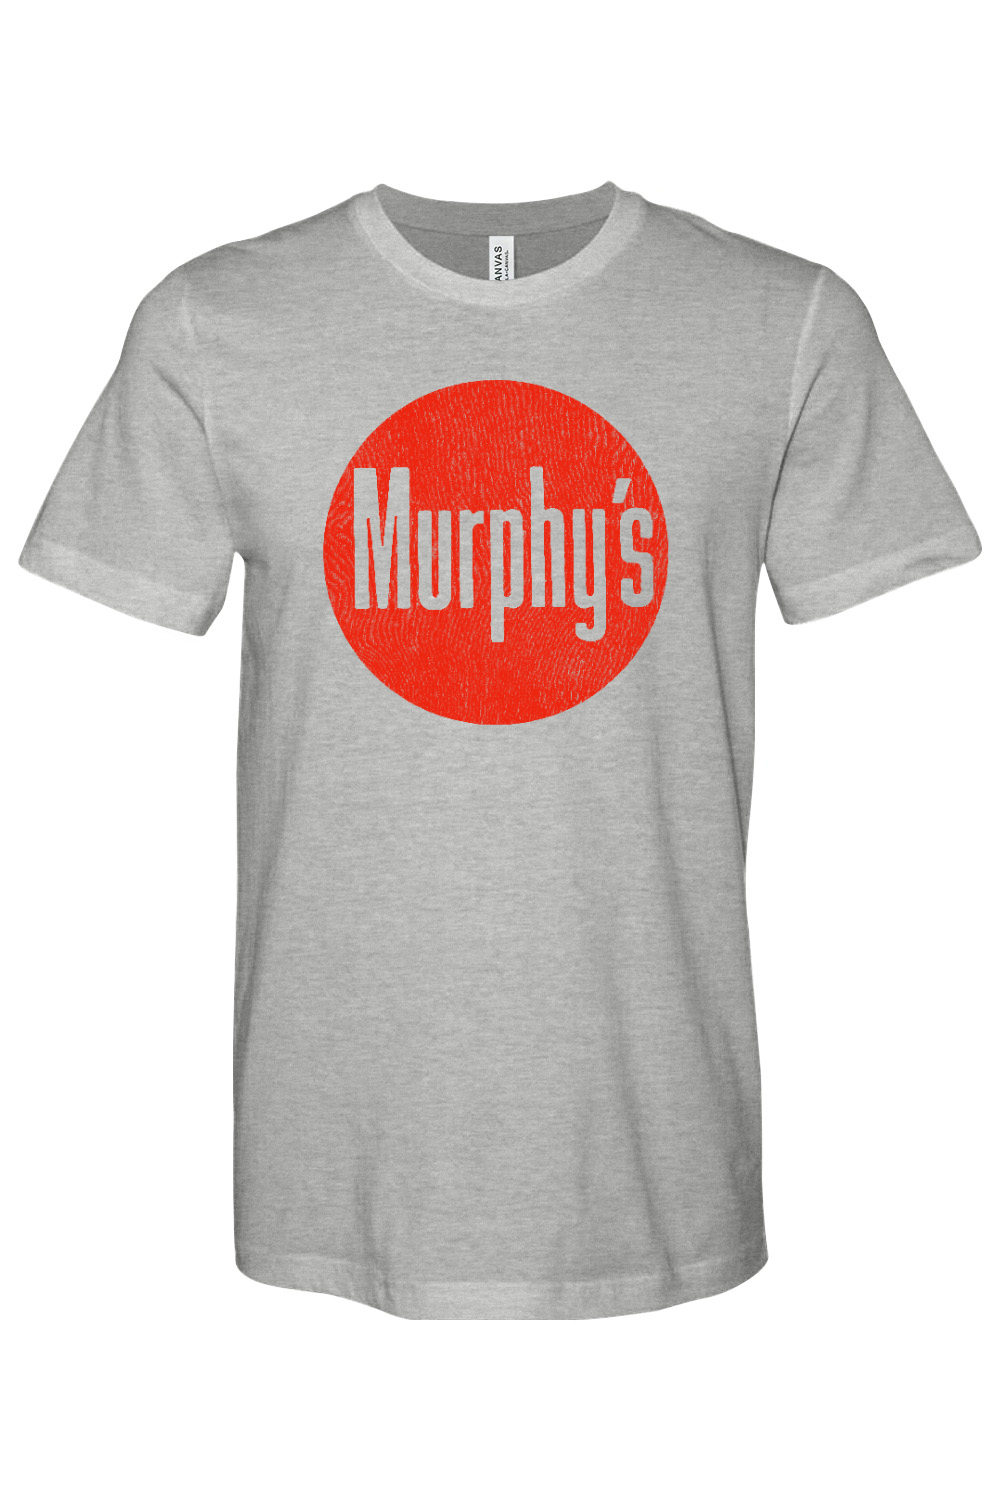 Murphy's Logo - Bella + Canvas Heathered Jersey Tee - Yinzylvania